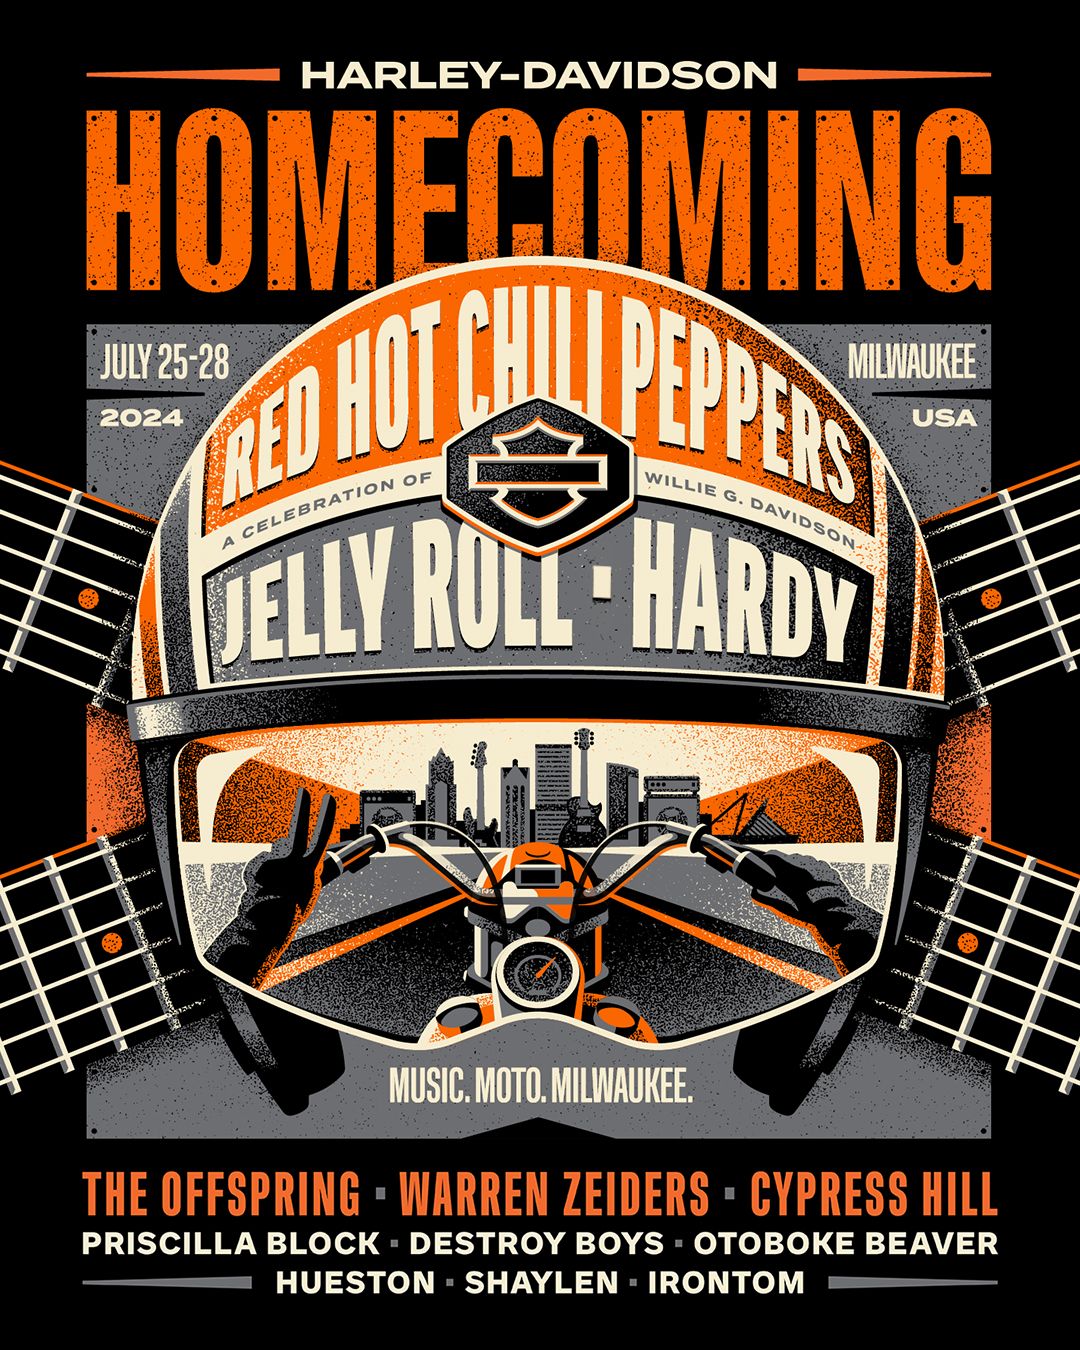 Harley-Davidson Homecoming 2024 Lineup: Red Hot Chili Peppers, Jelly Roll, HARDY, The Offspring, Warren Zeiders, Cypress Hill, Priscilla Block, Destroy Boys, Otoboke Beaver, Hueston, Shaylen, Irontom